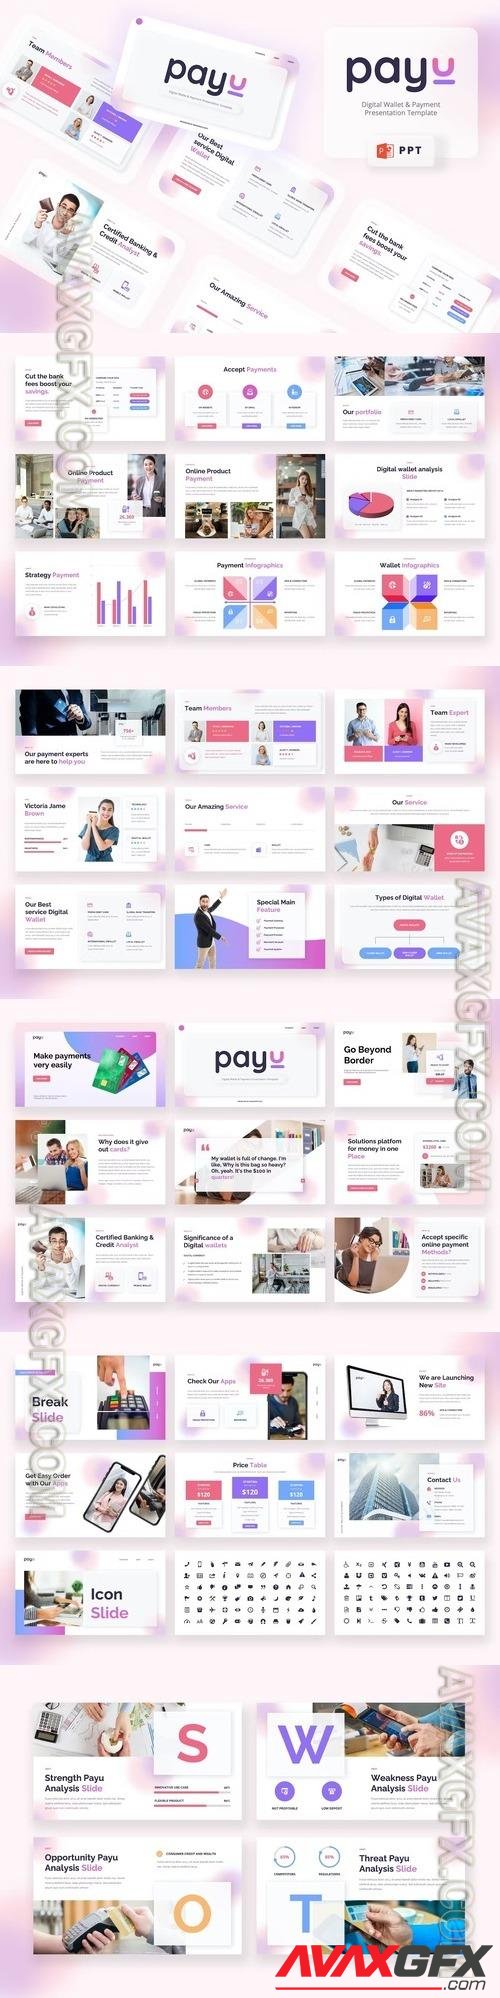 PAYU - Digital Wallet Powerpoint Template